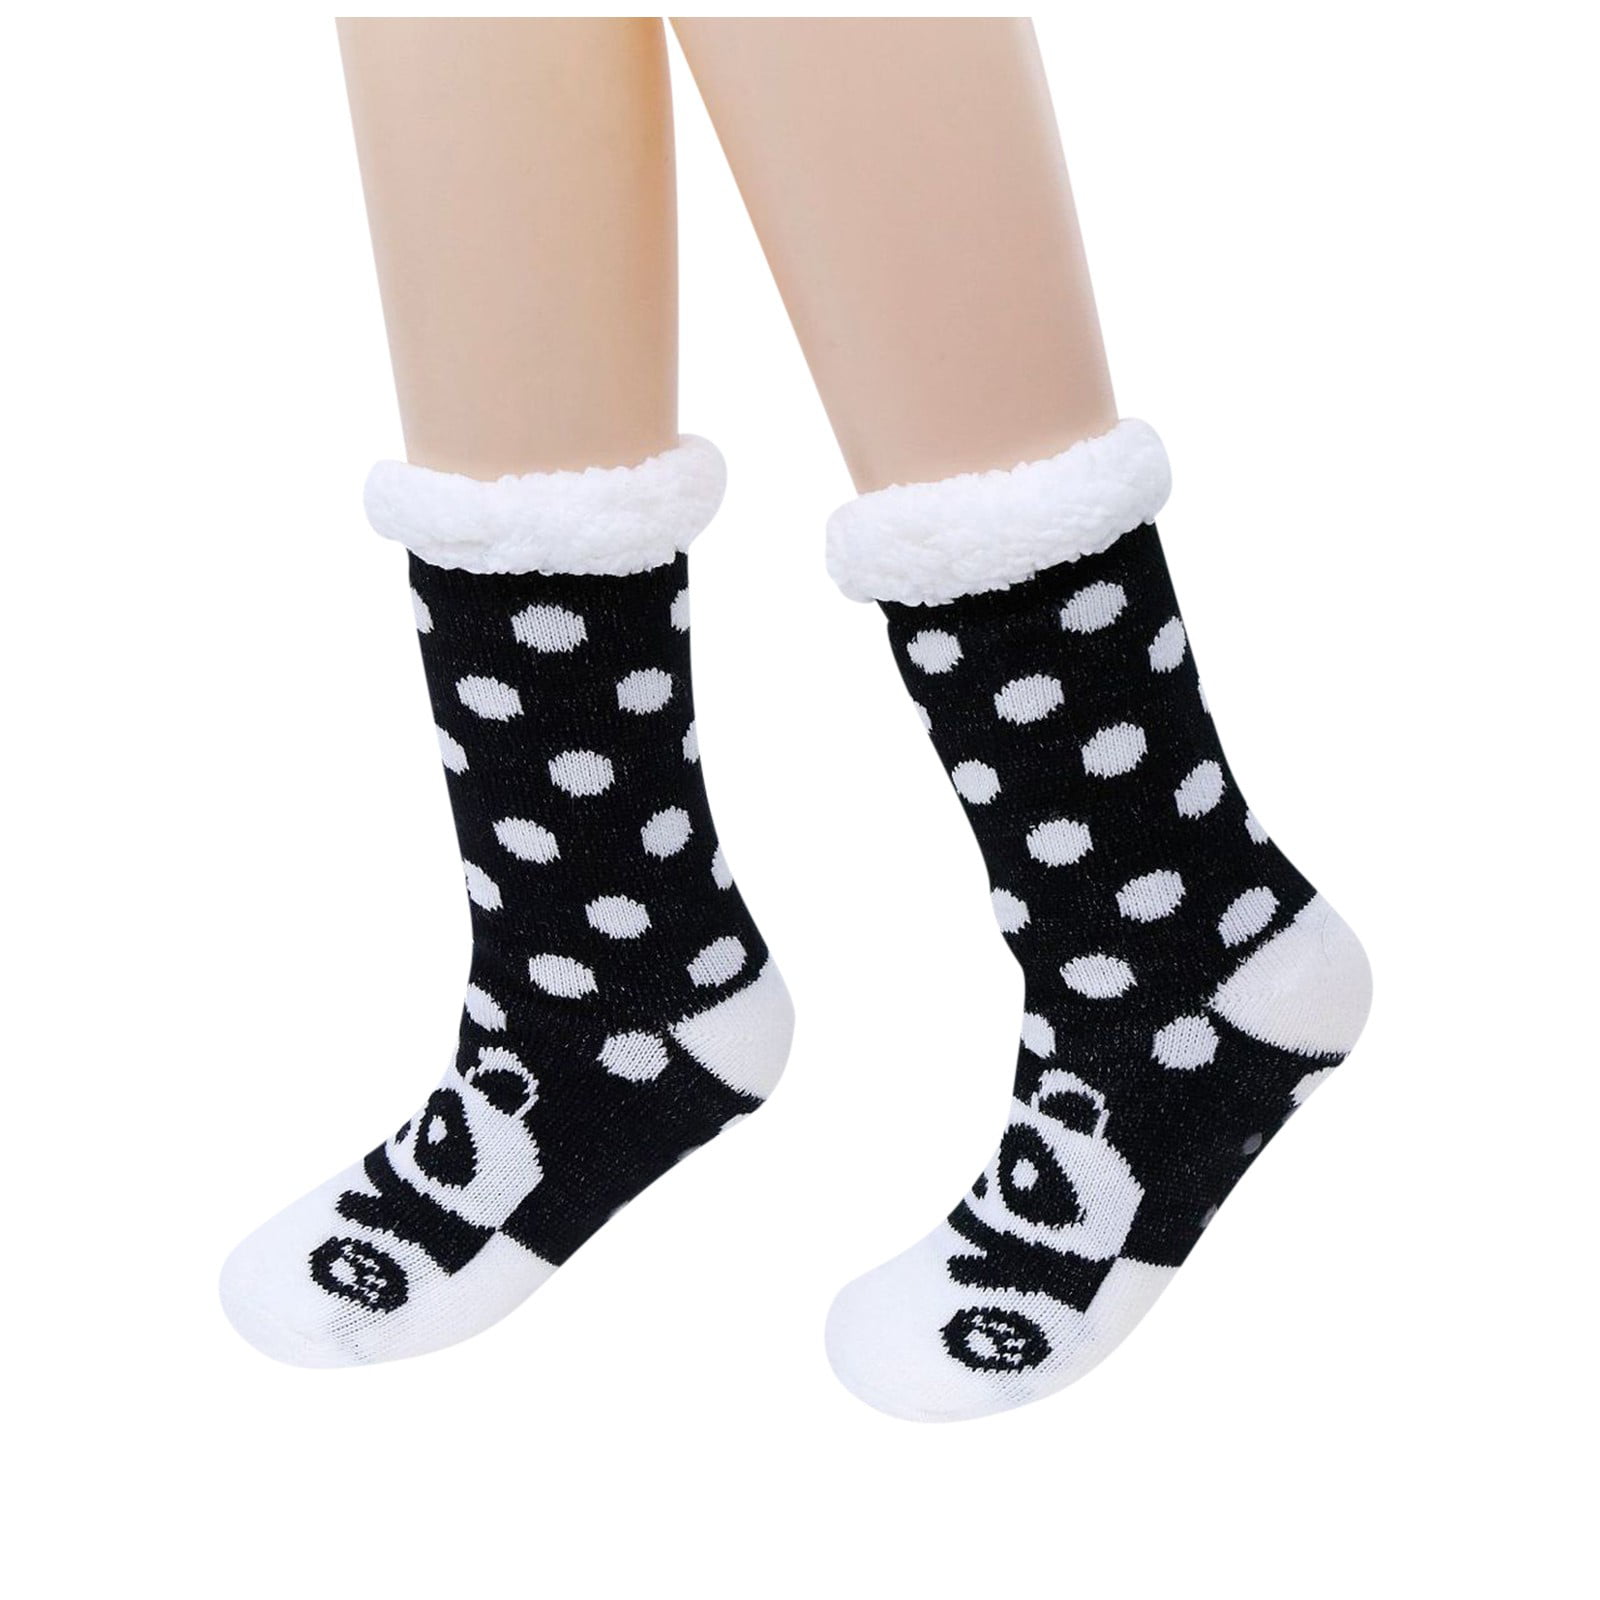 Men Women's Fashion 3D Cartoon Halloween Socks Lovers Cotton Soft Socks Floor CO